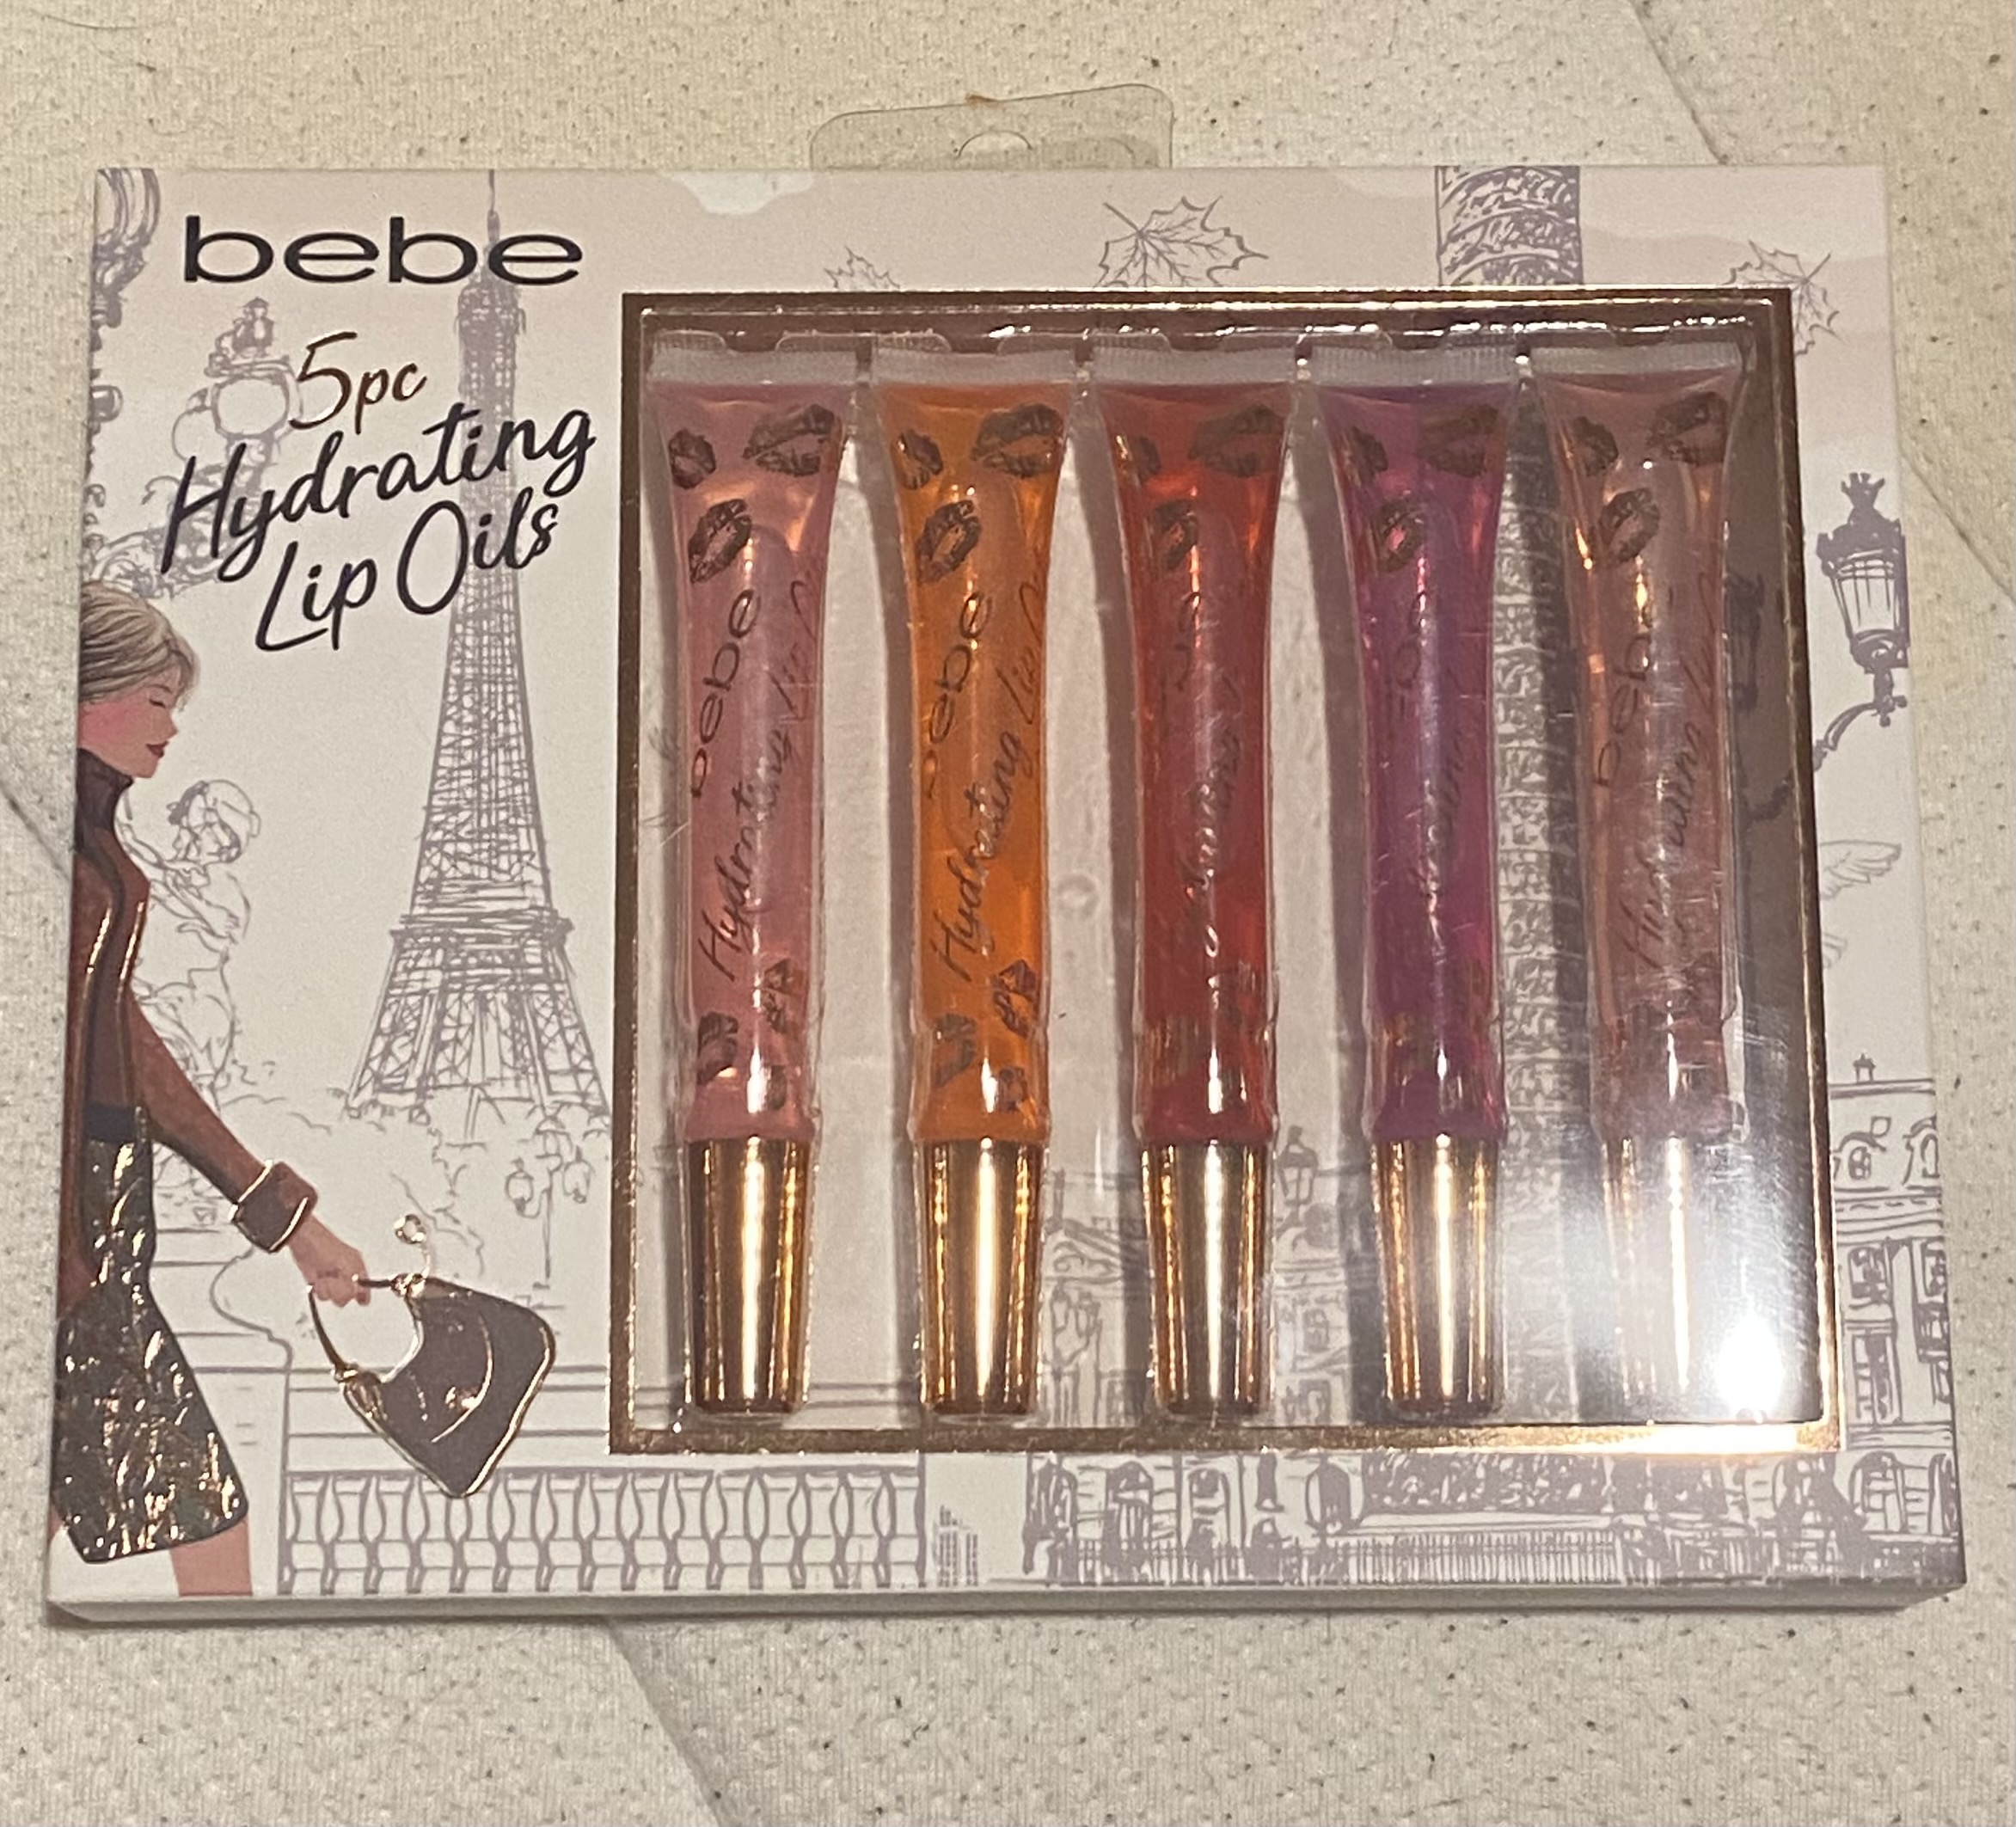 Bebe lip oils brand by mylittleartshow8 on DeviantArt